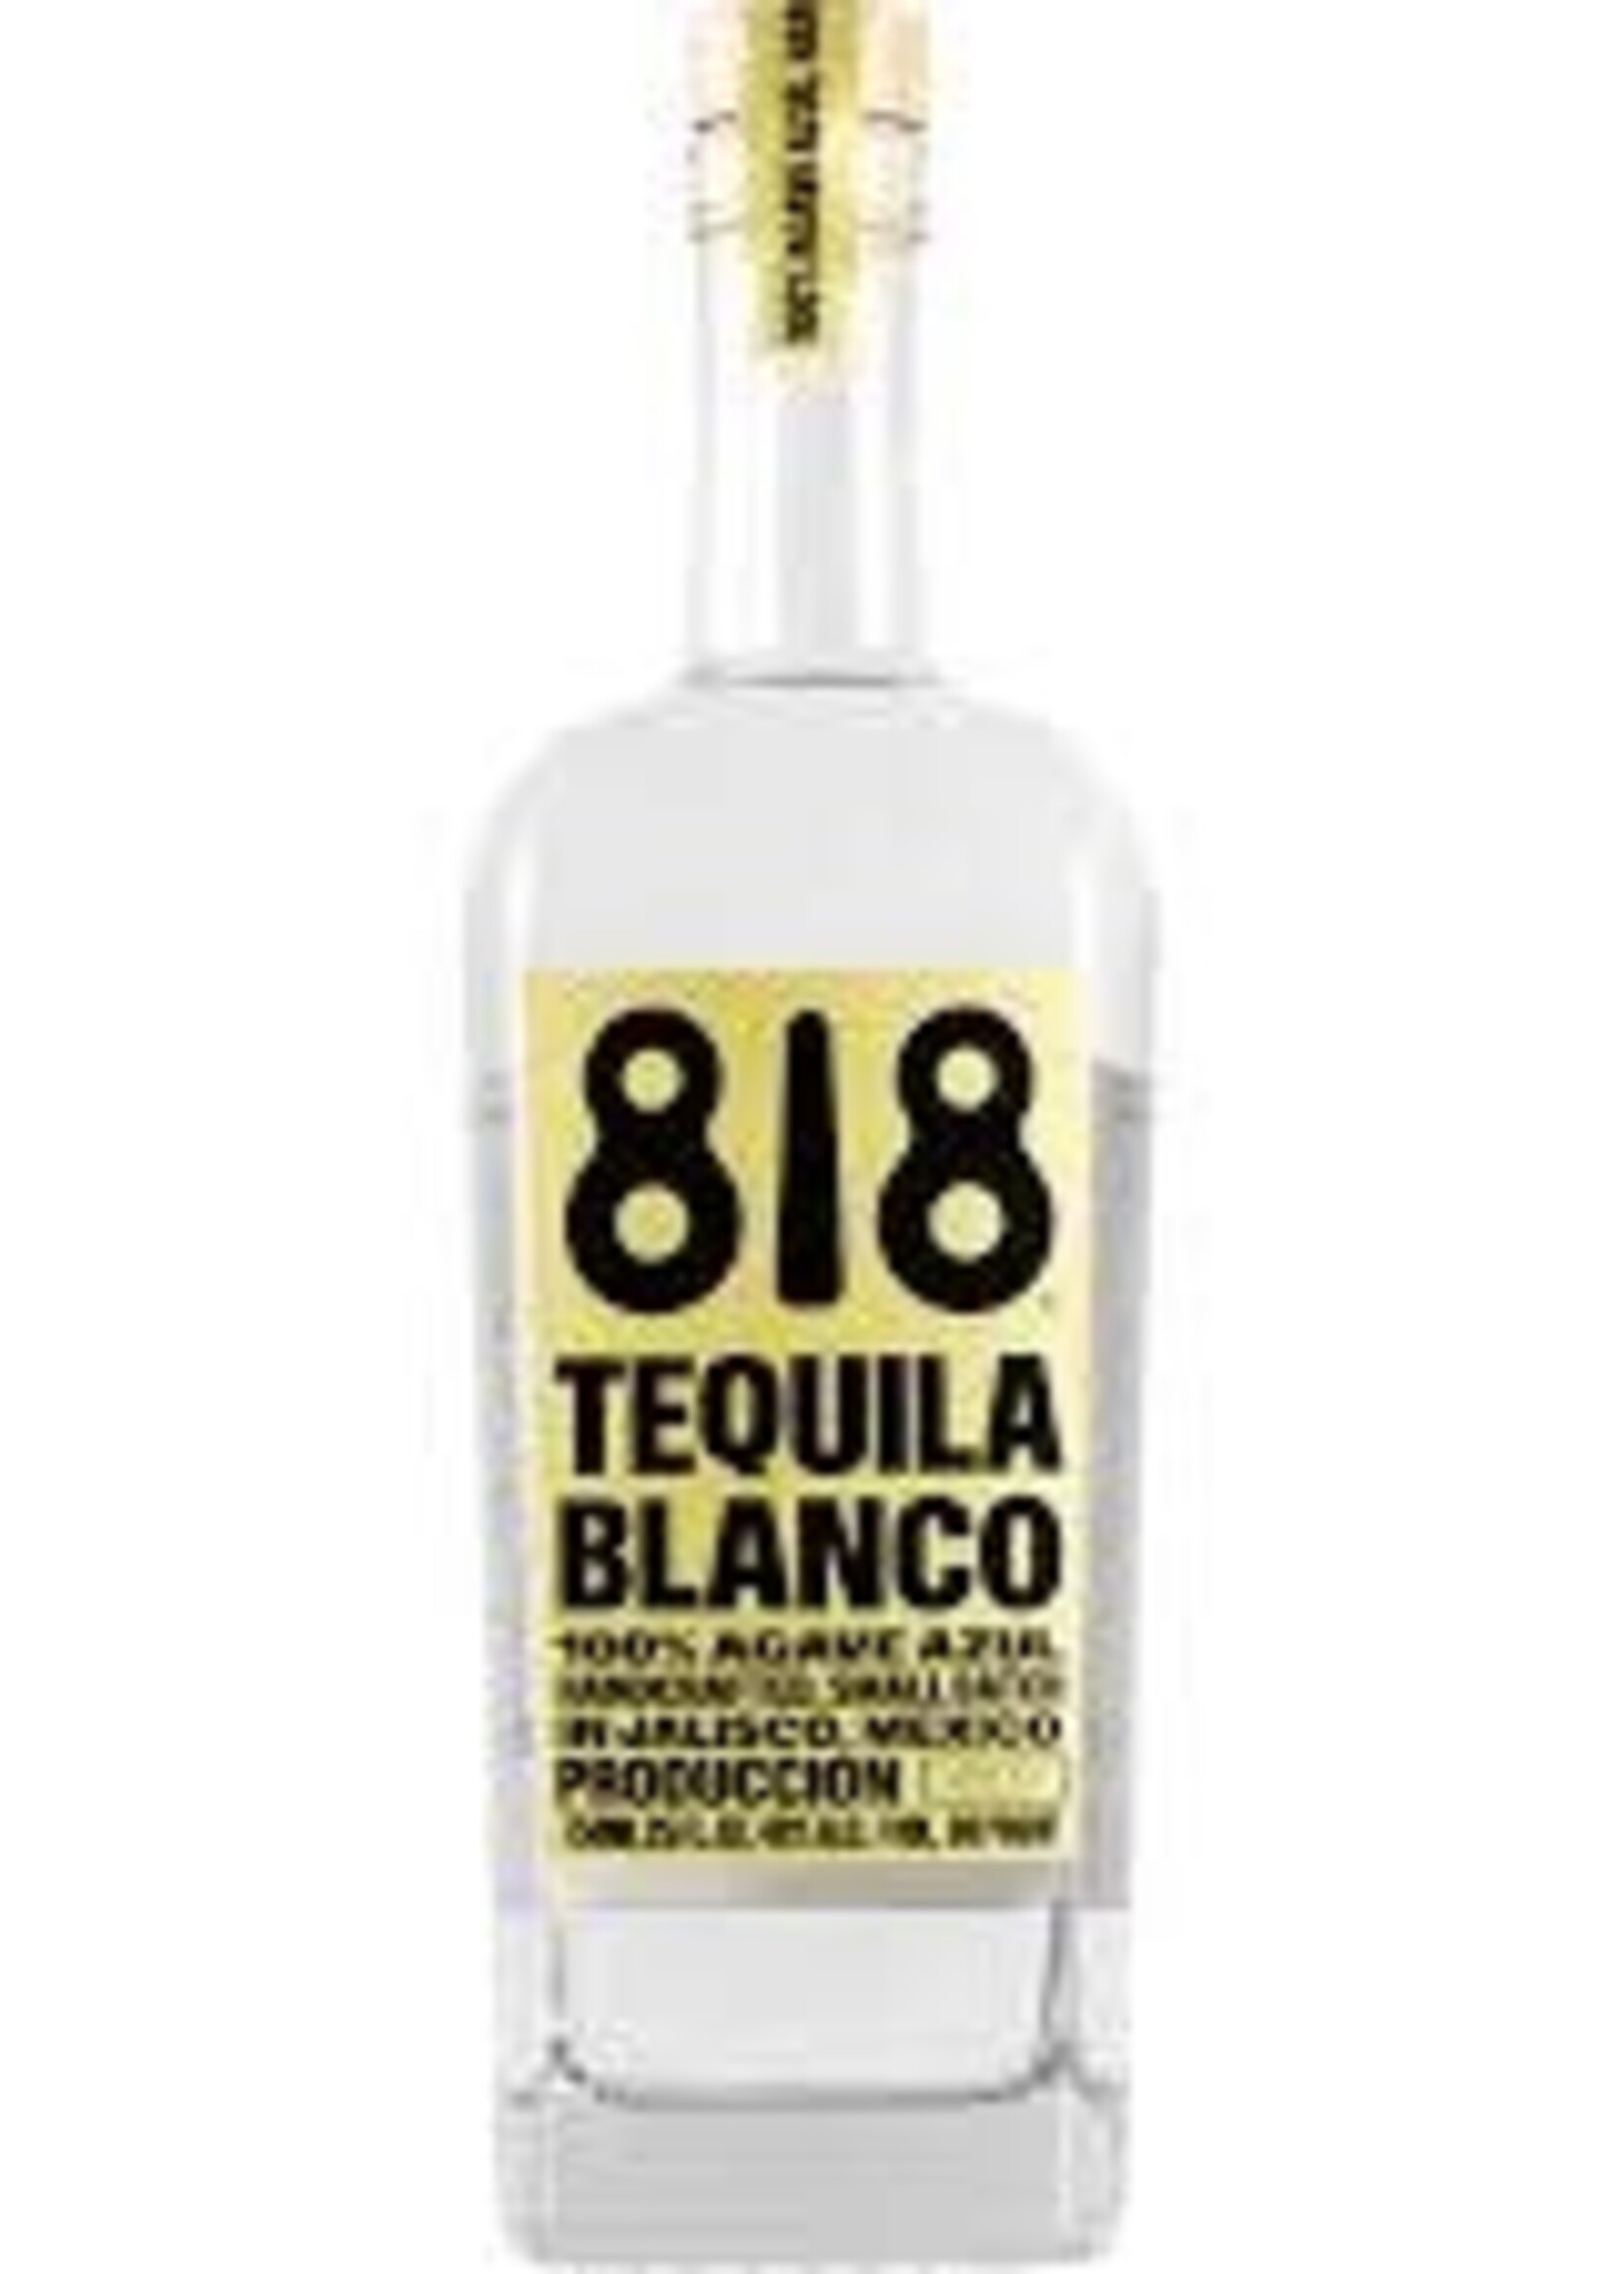 818 Tequila Blanco 375ML